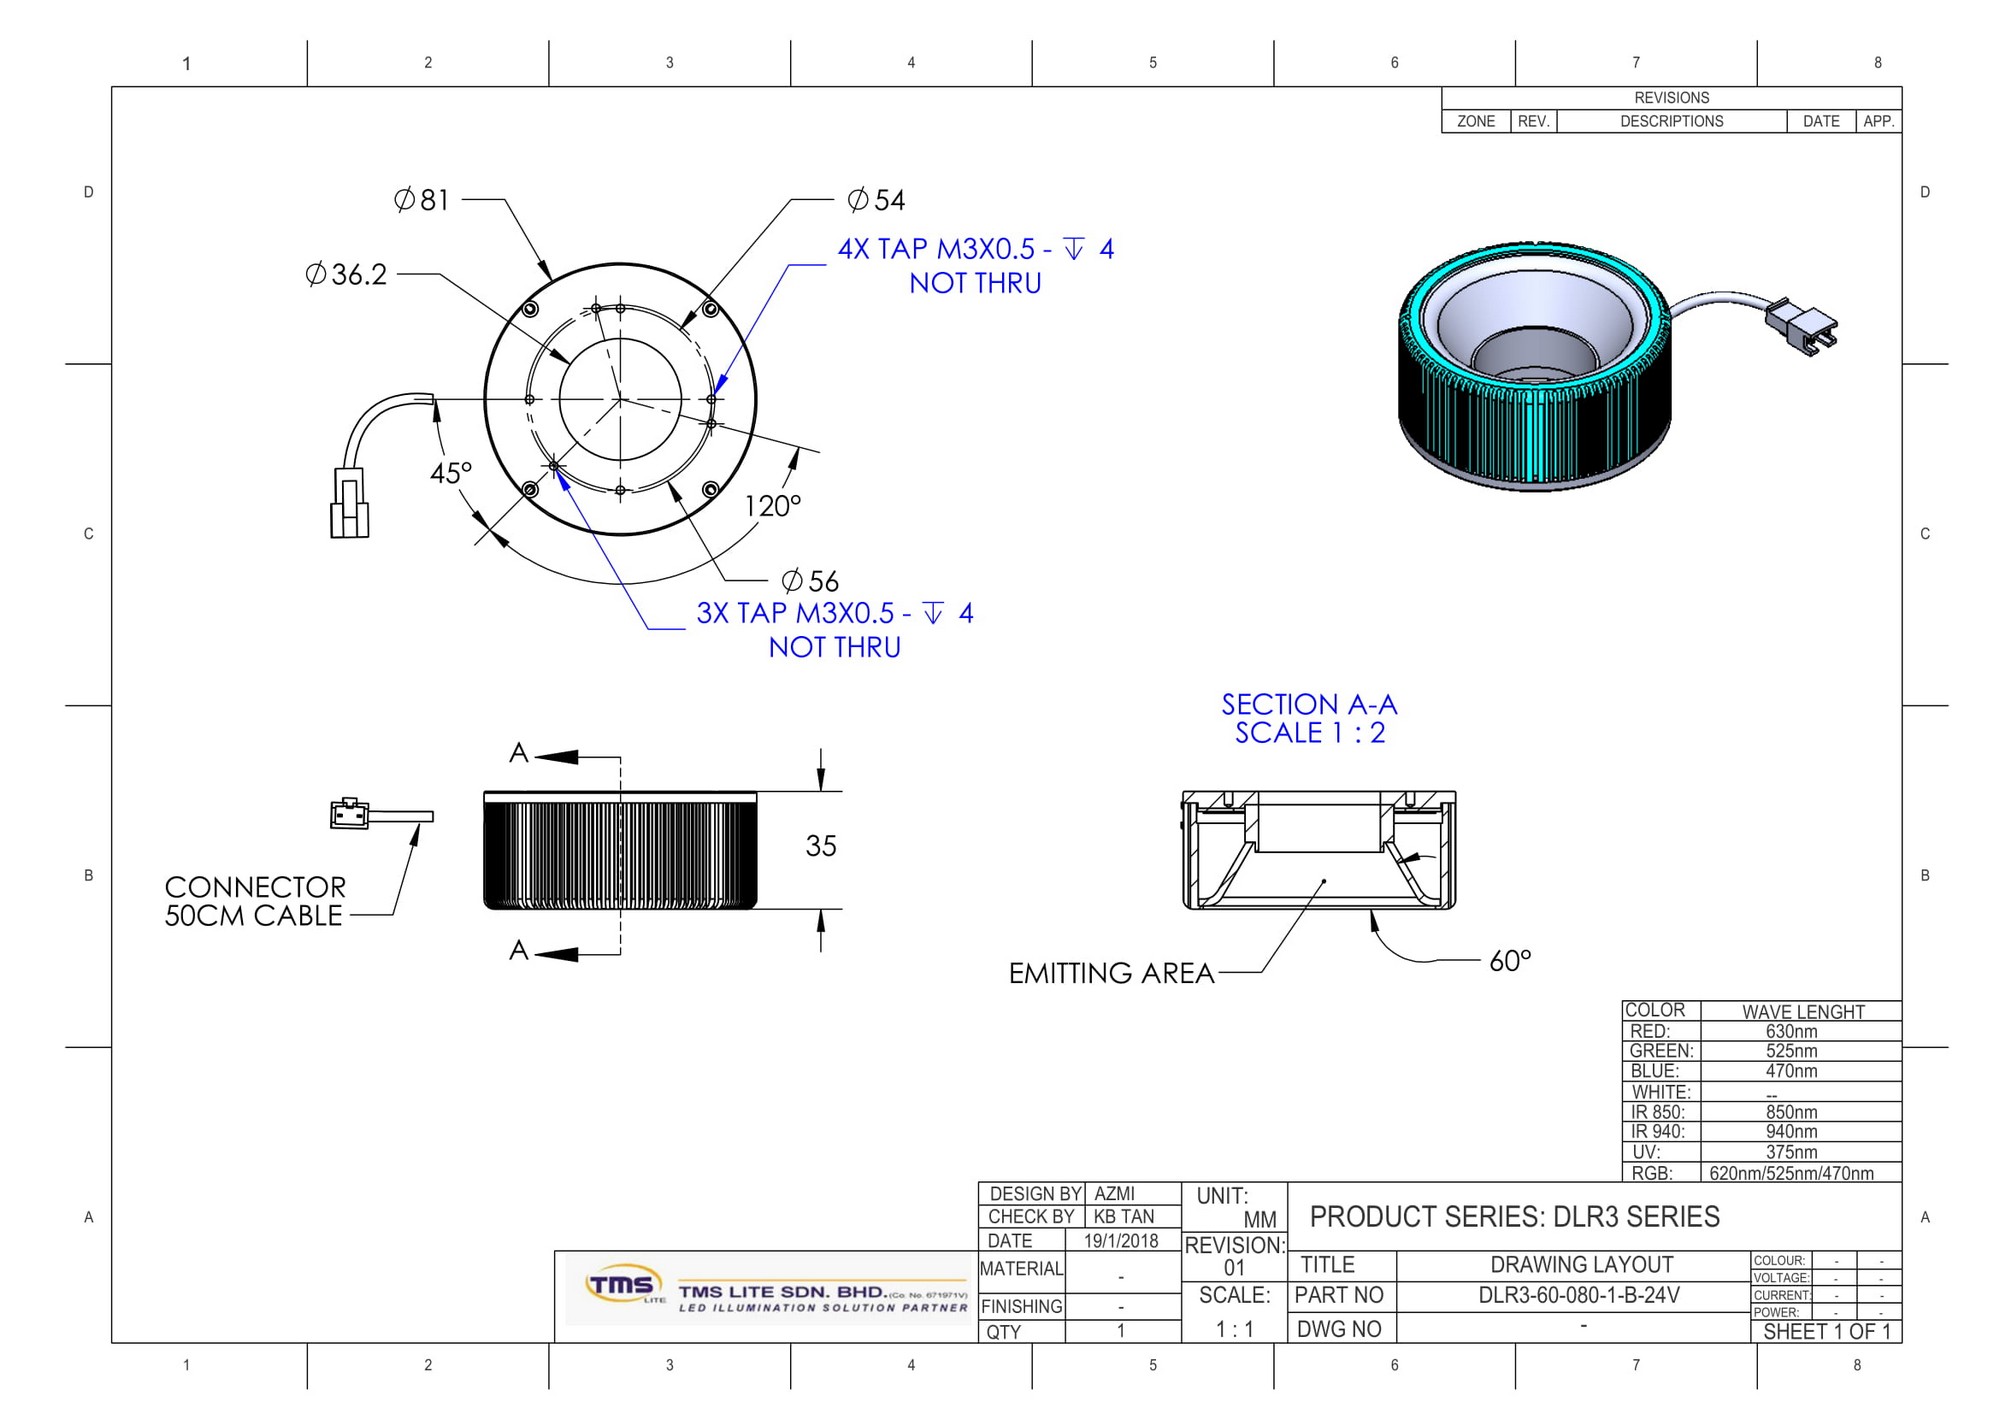 DLR3-60-080-1-G-24V Drawing